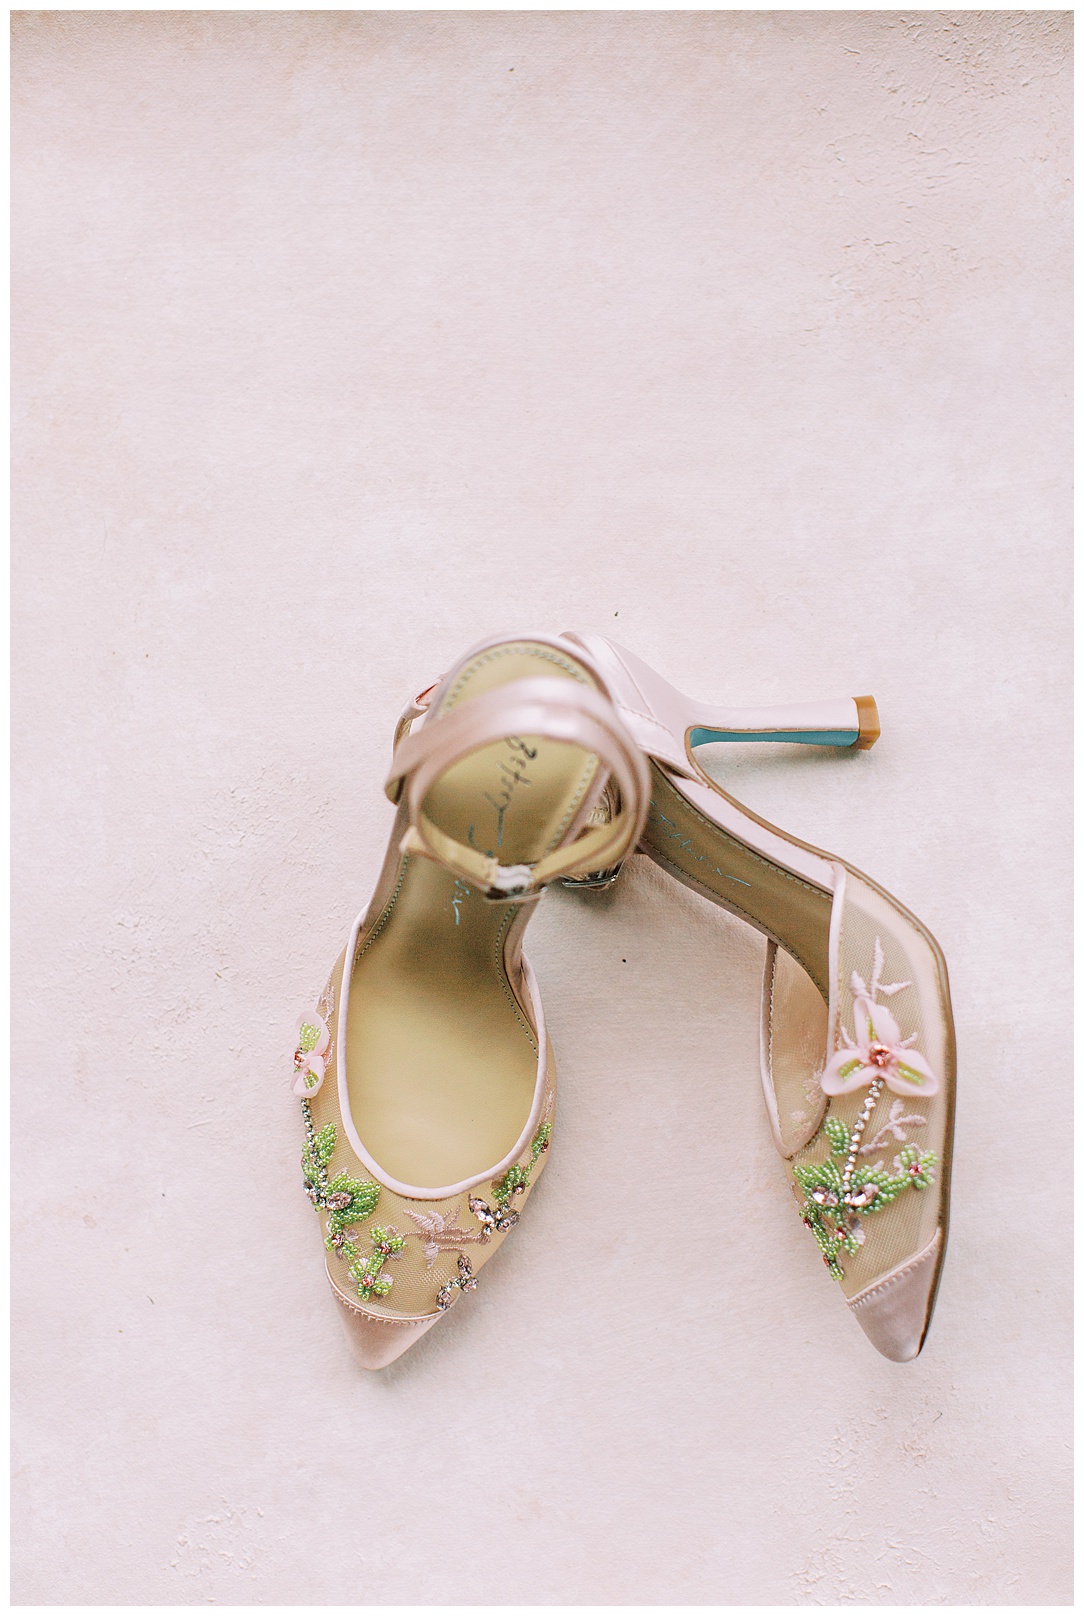 Betsey Johnson Shoes - Northern Virginia Wedding Details